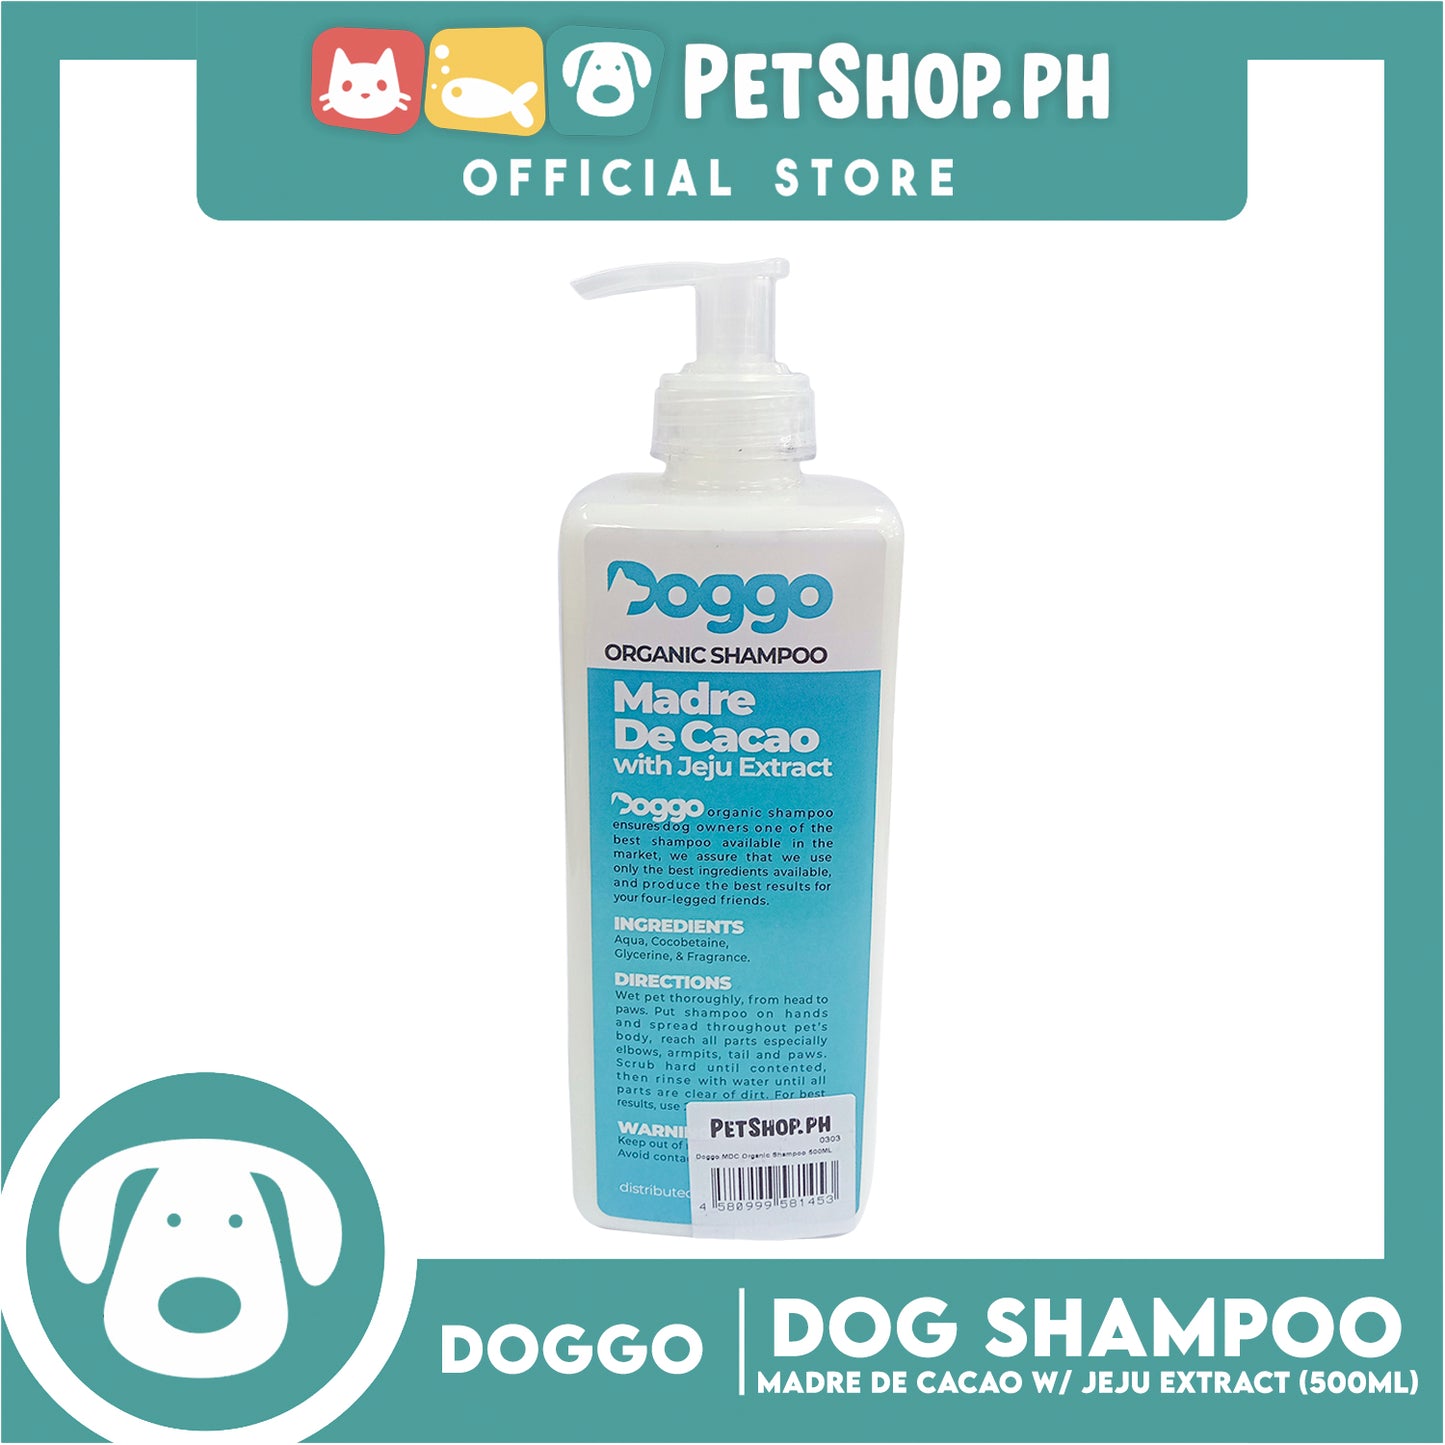 Doggo Organic Shampoo Madre De Cacao with Jeju Extract 500ml